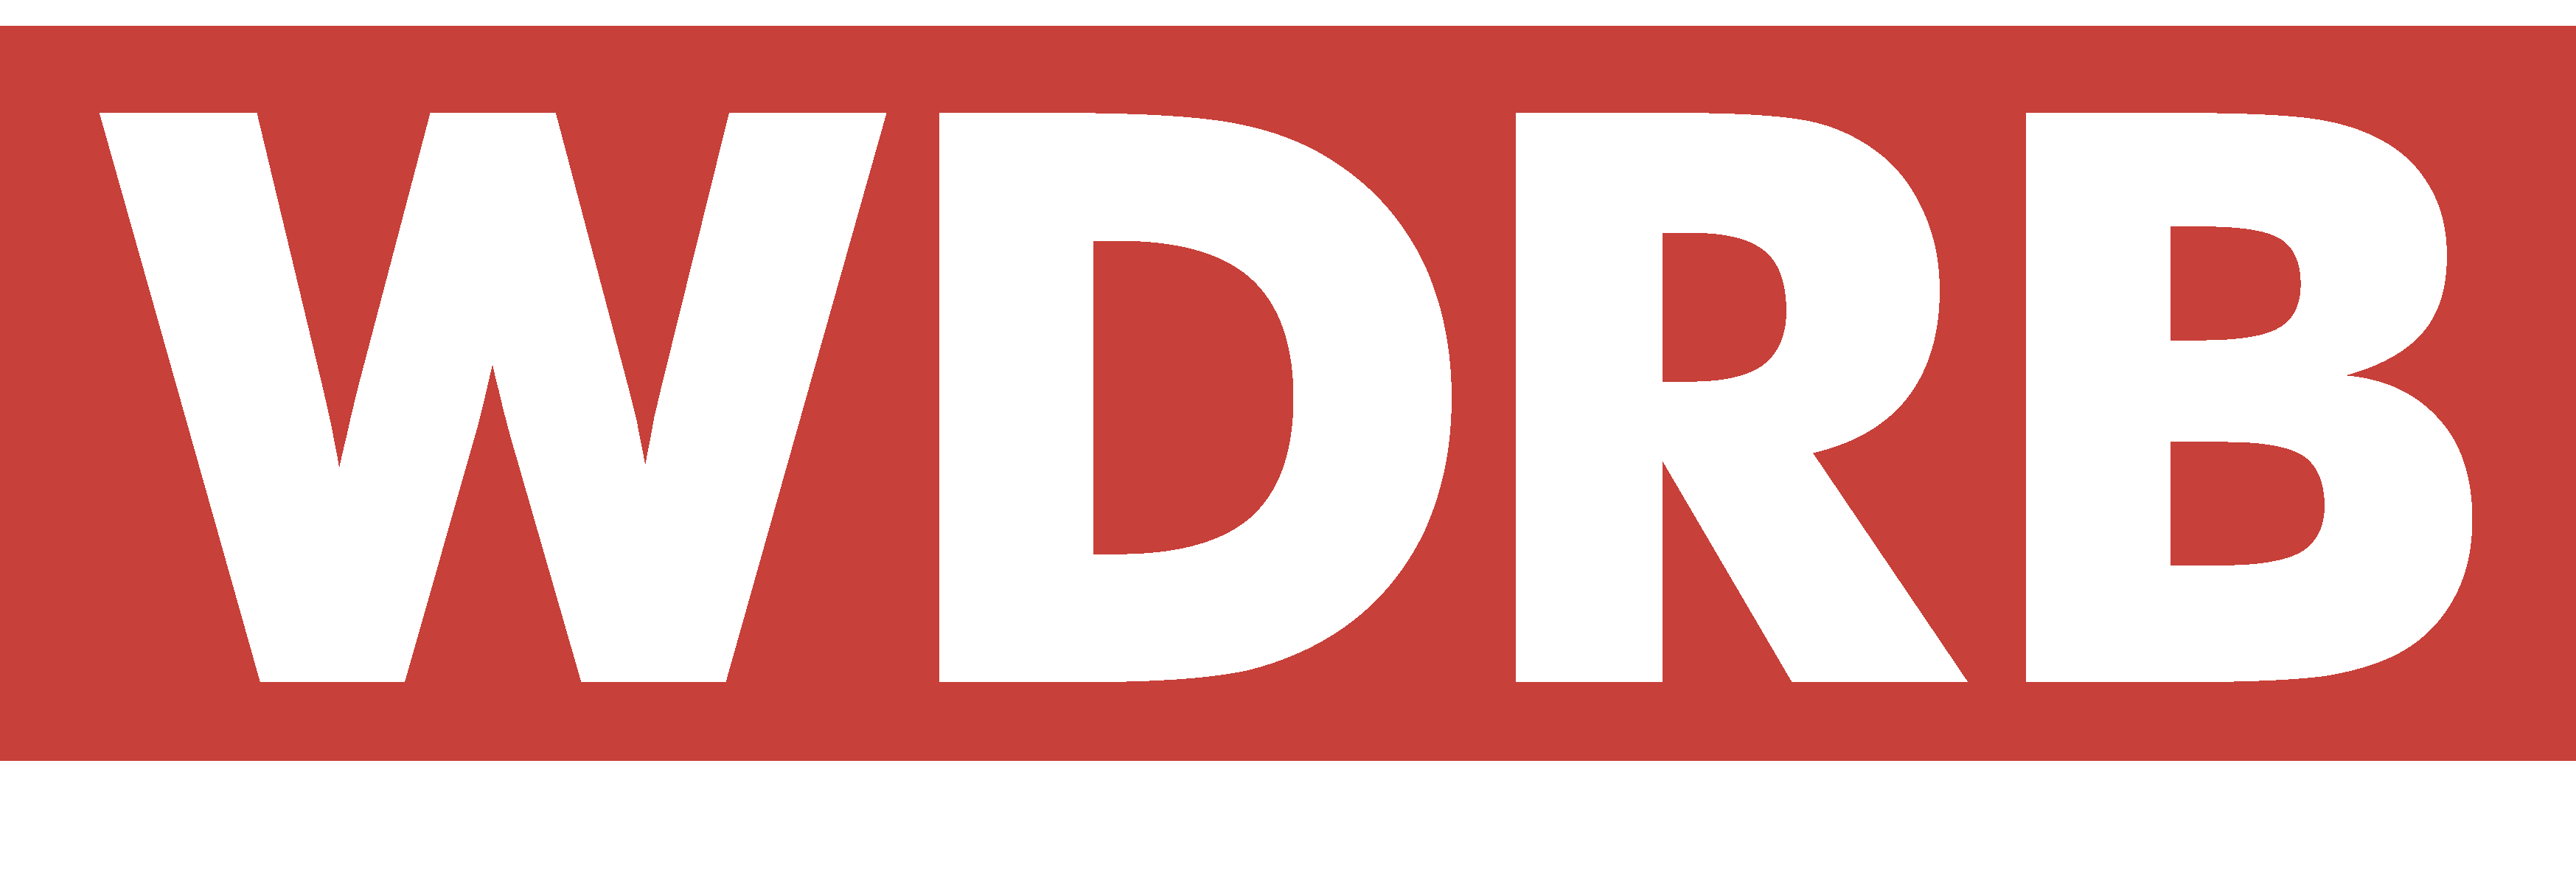 WDRB